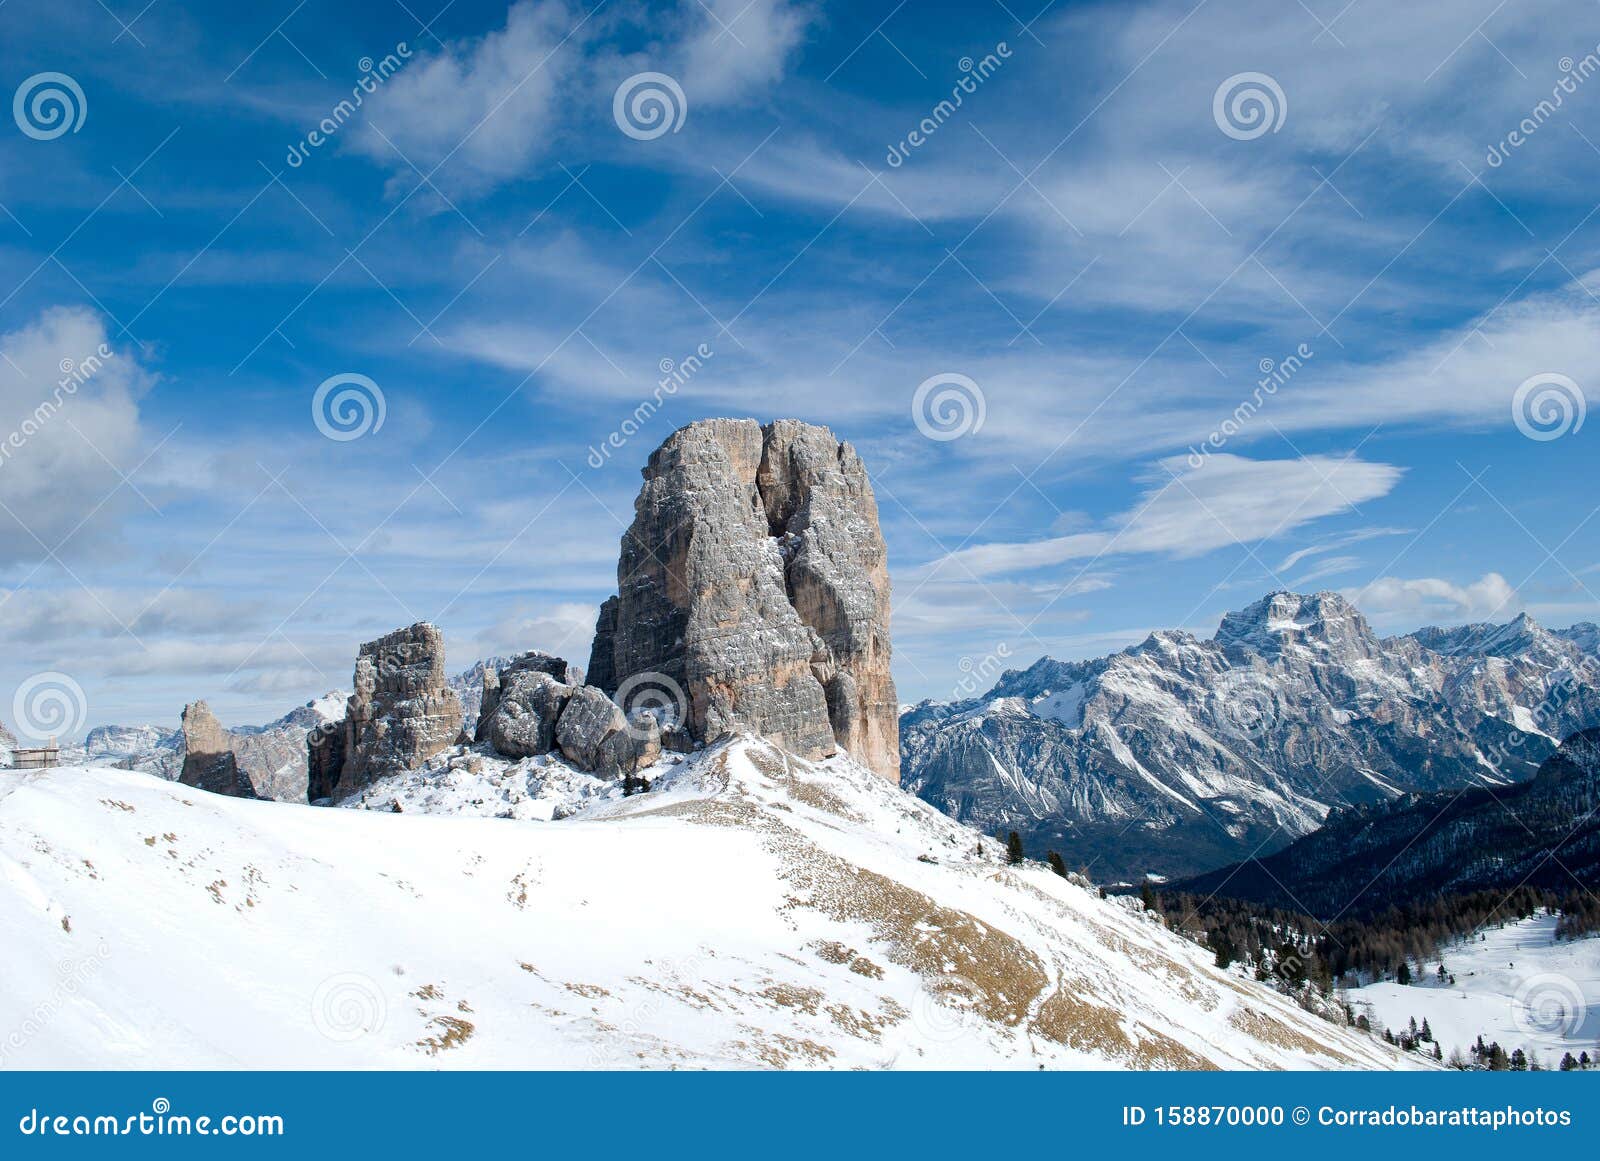 Splendid Towers Cortina D Ampezzo Venetian Dolomites Discovering Beauties One Most Beautiful Regions Italy Veneto 158870000 